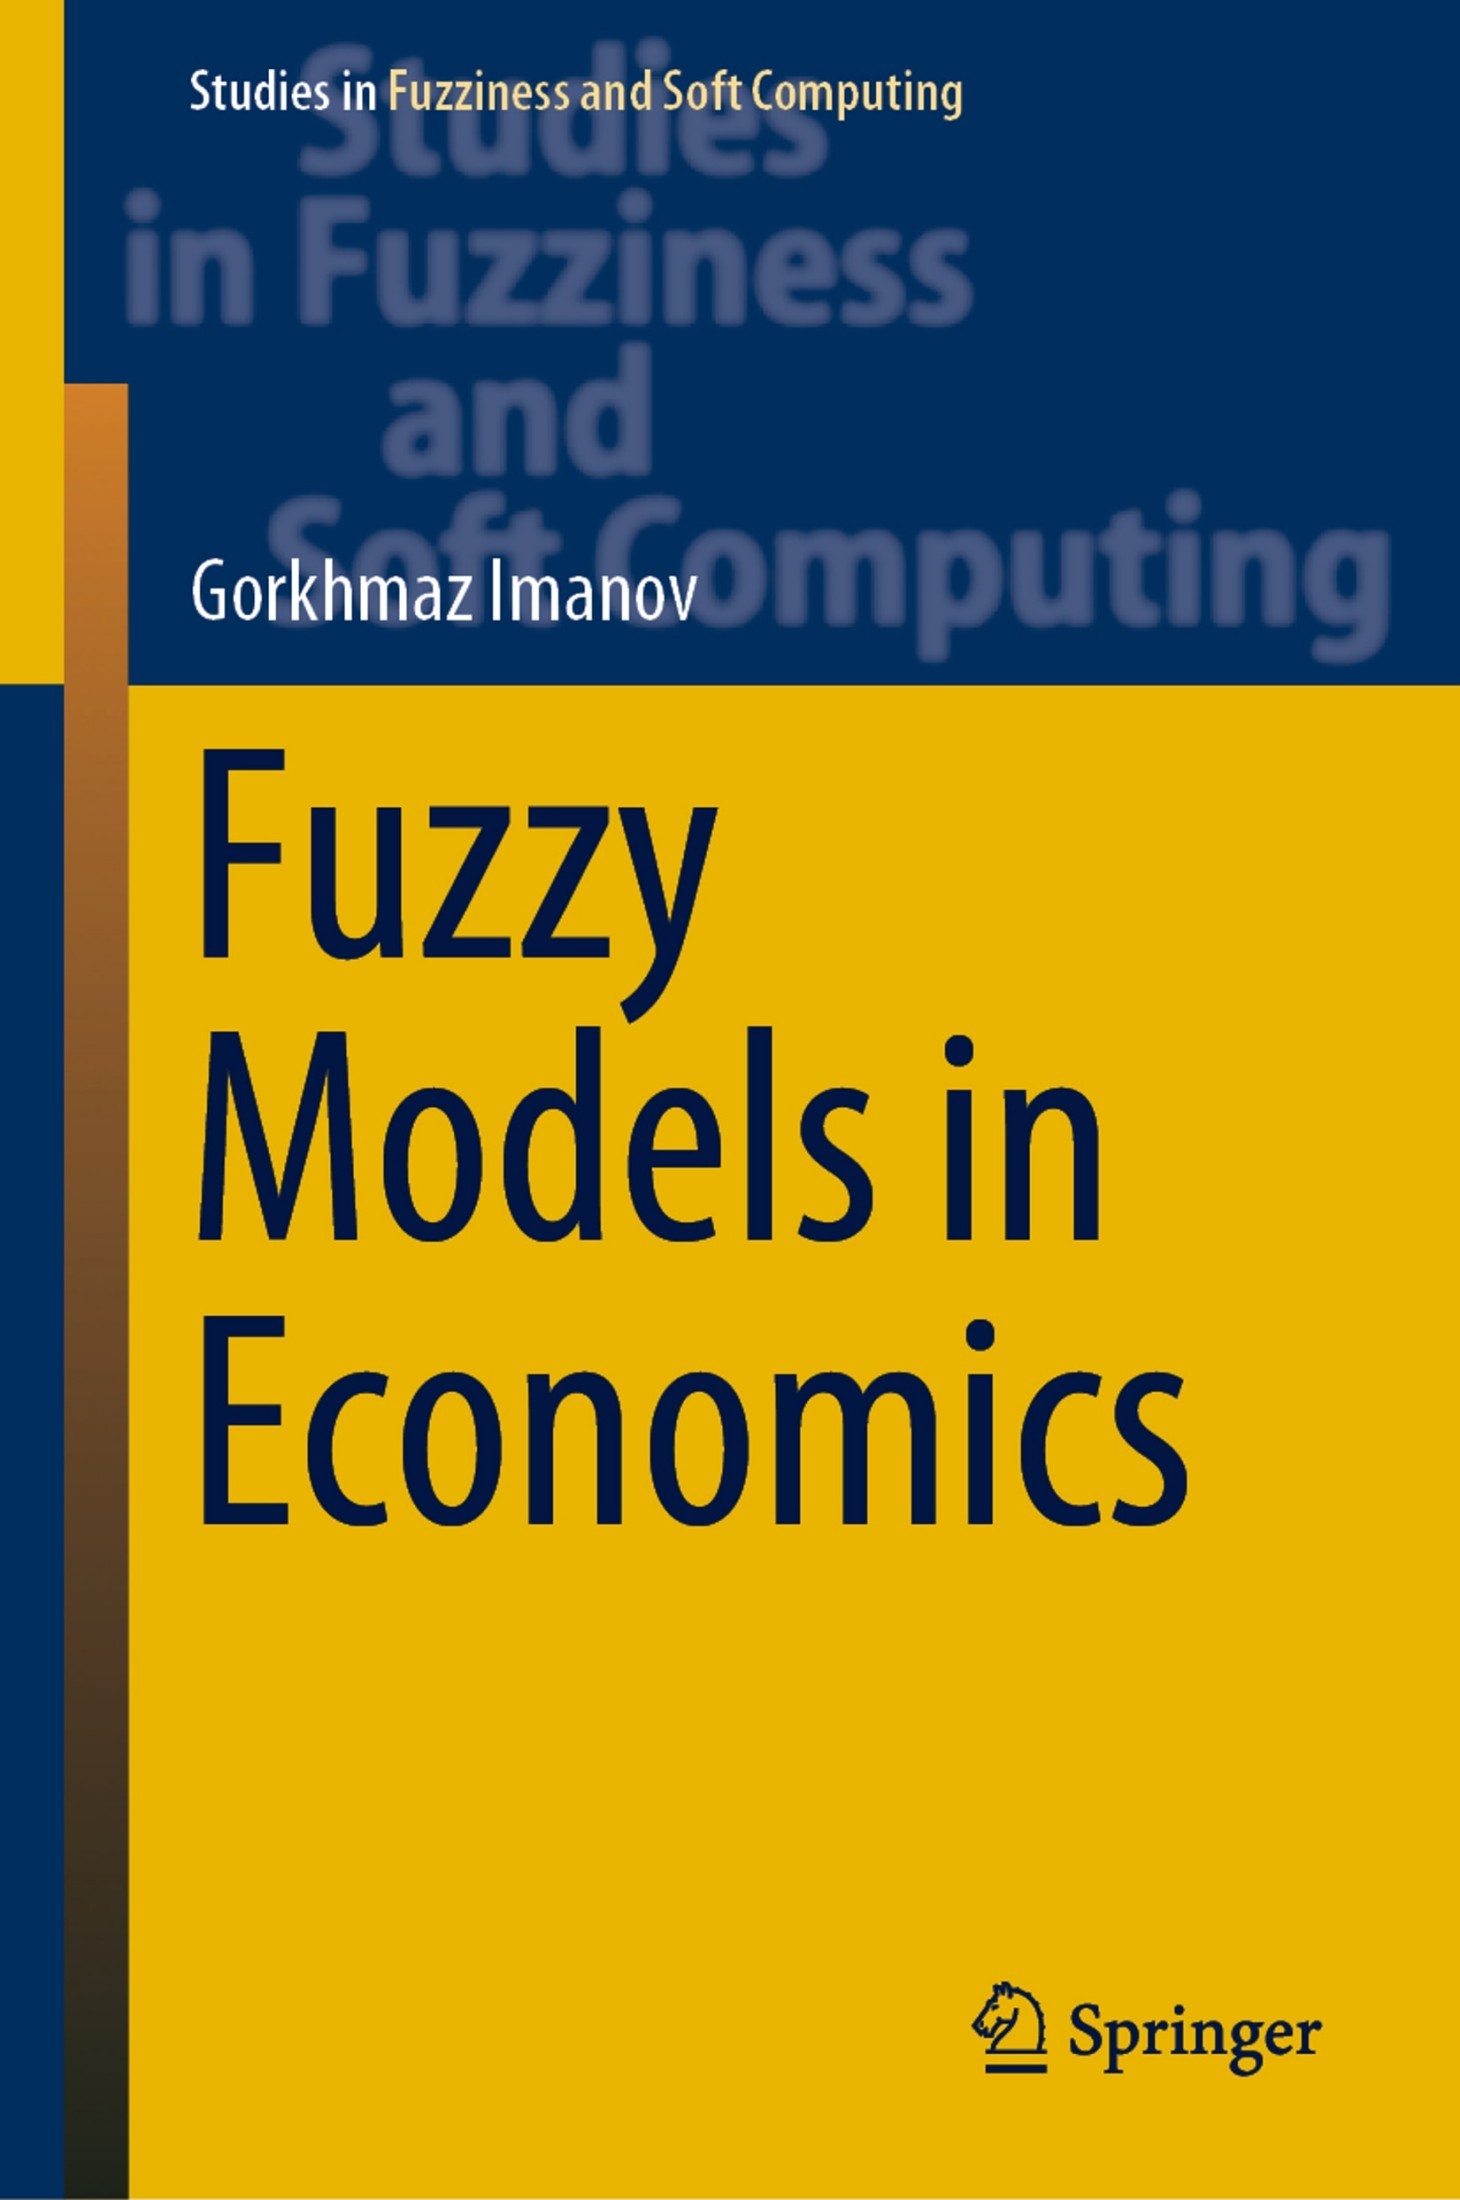 Fuzzy Models in Economics